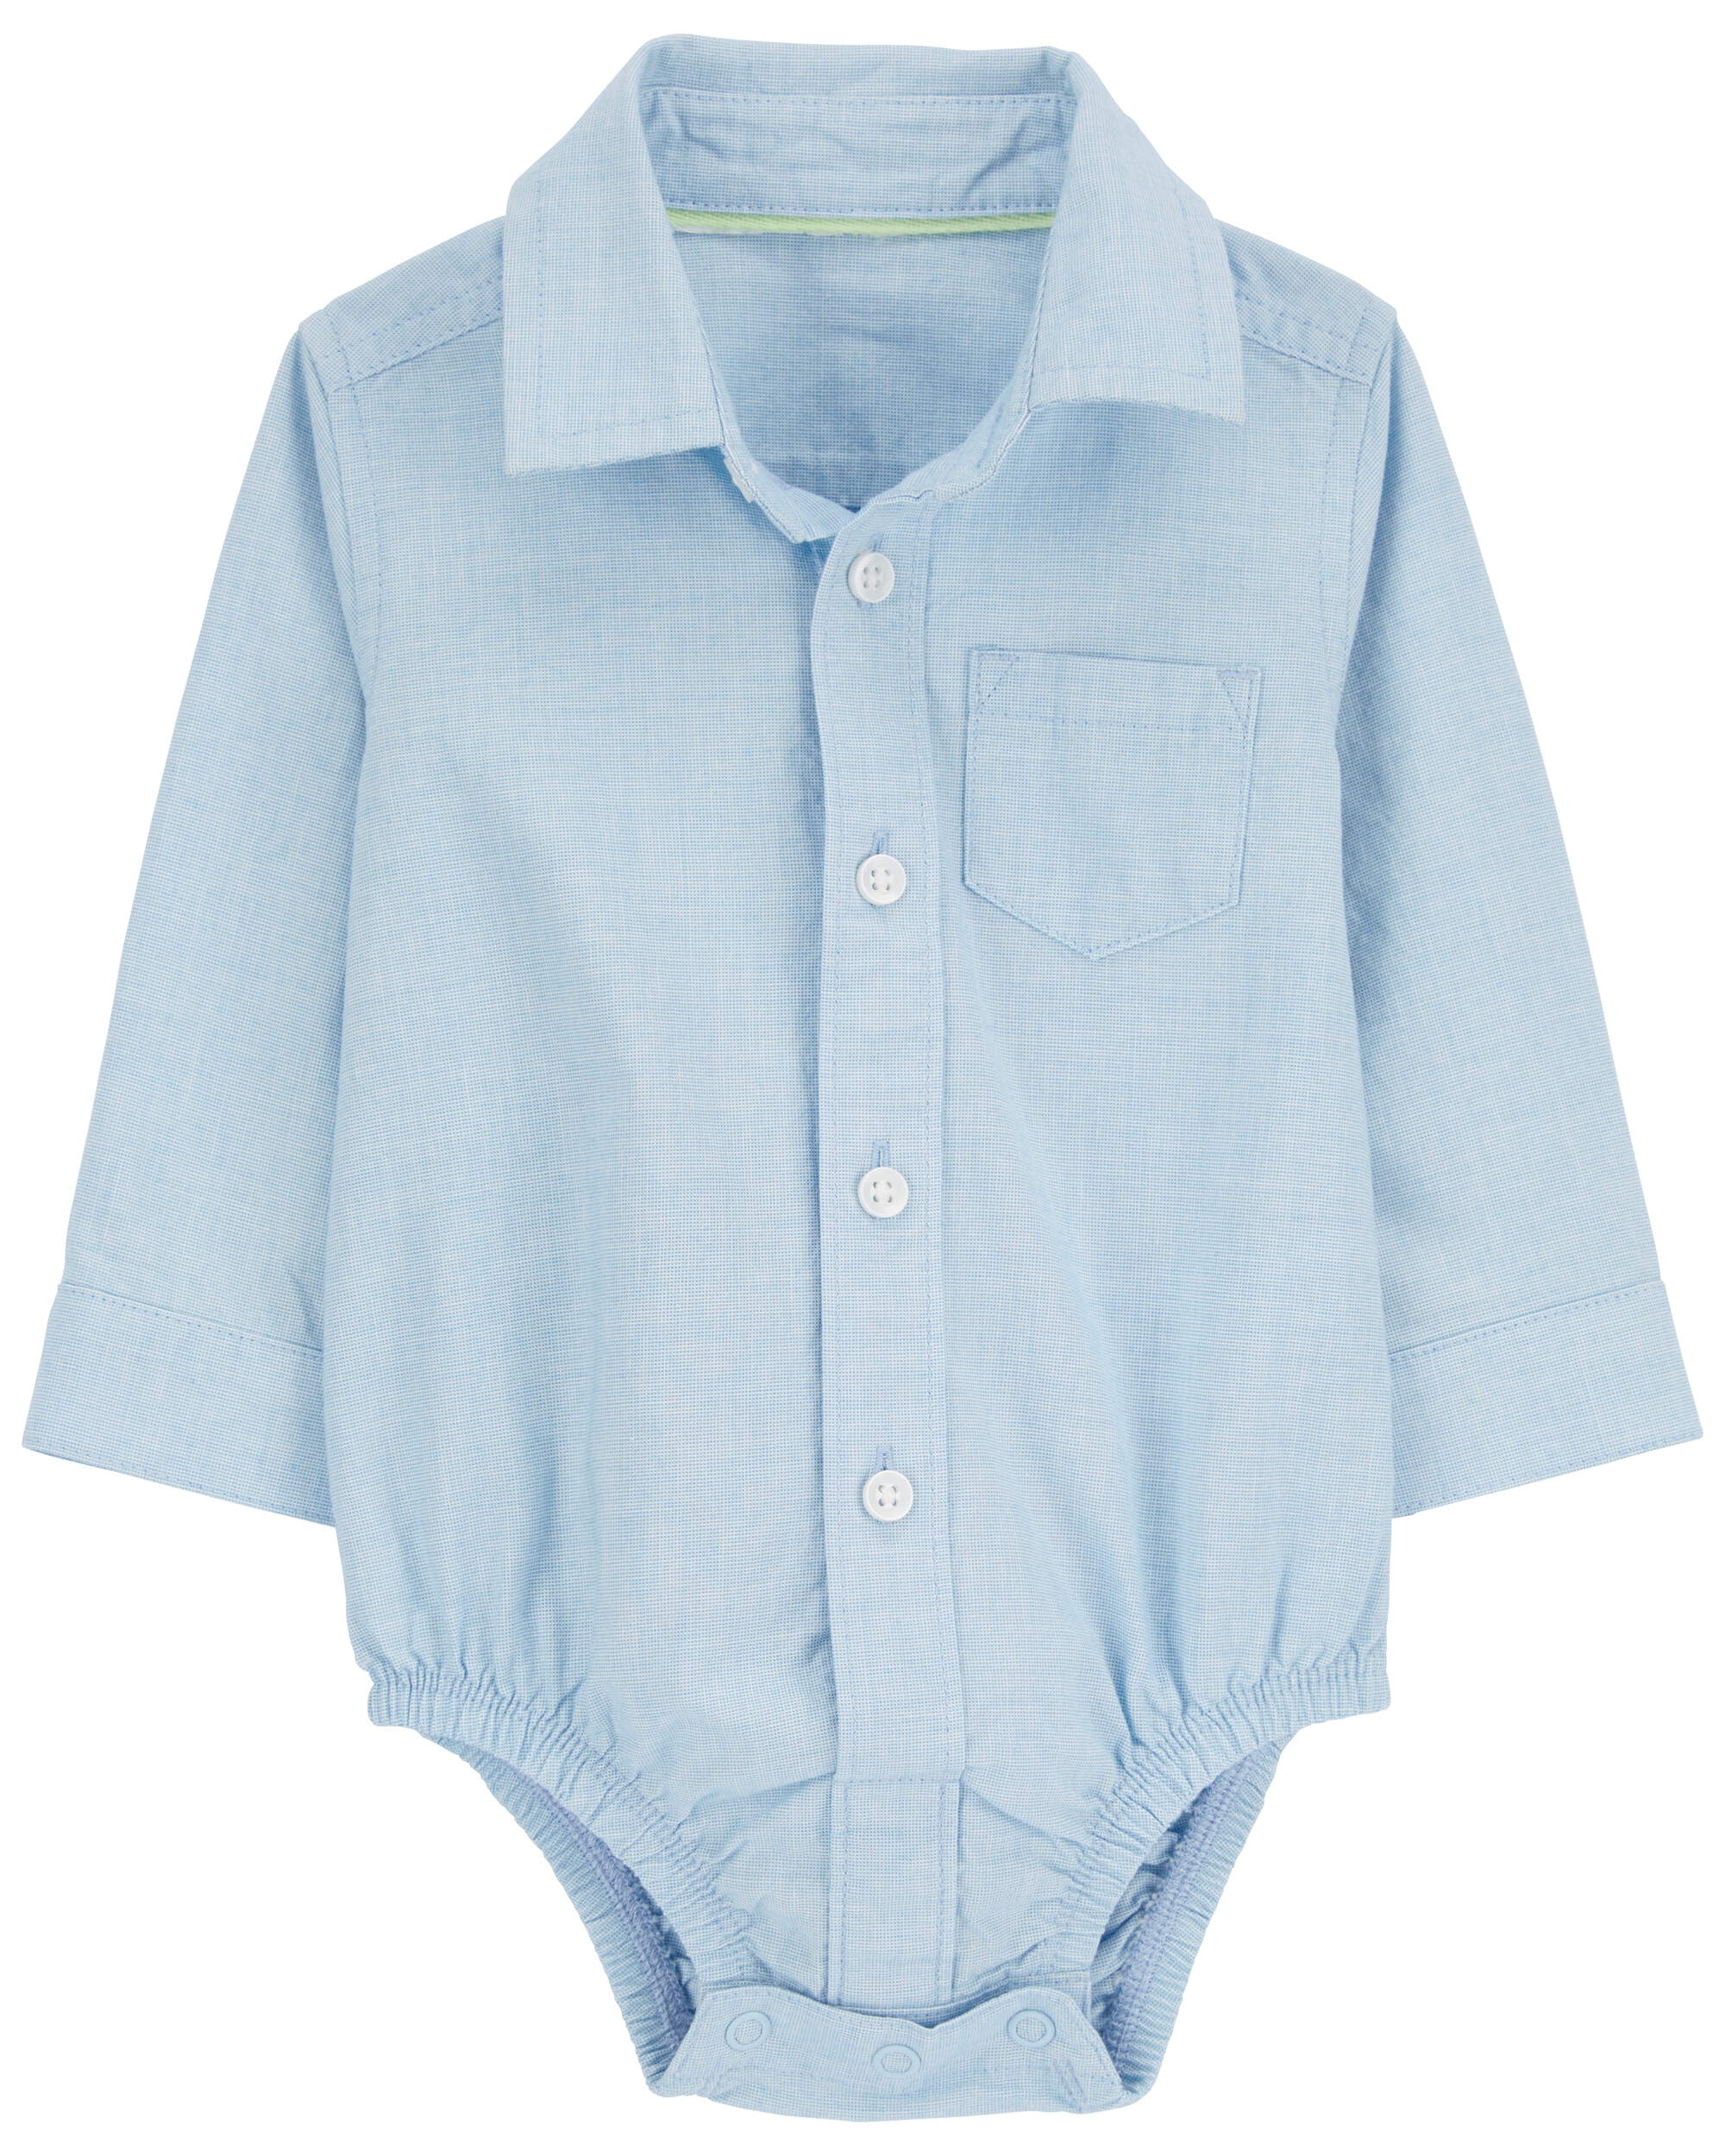 Baby 2-Piece Button-Front Bodysuit and Suspenders Pants Set